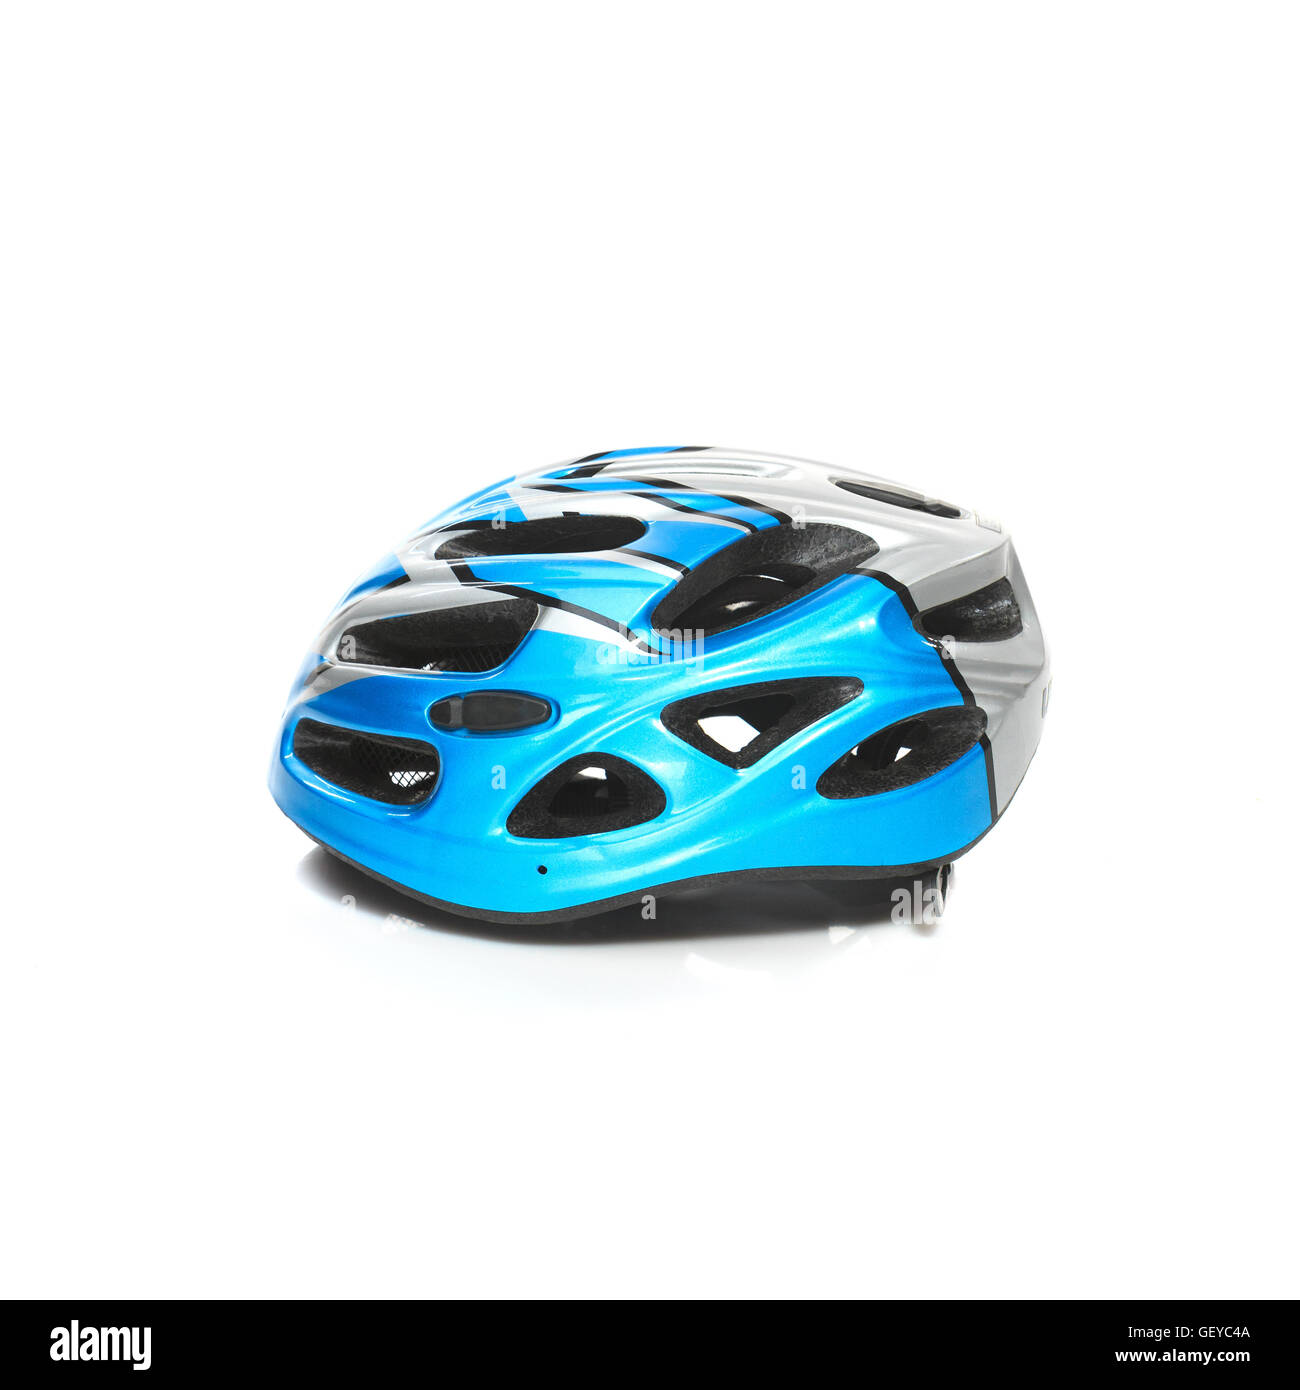 Bicycle mountain bike safety helmet isolated Stock Photo